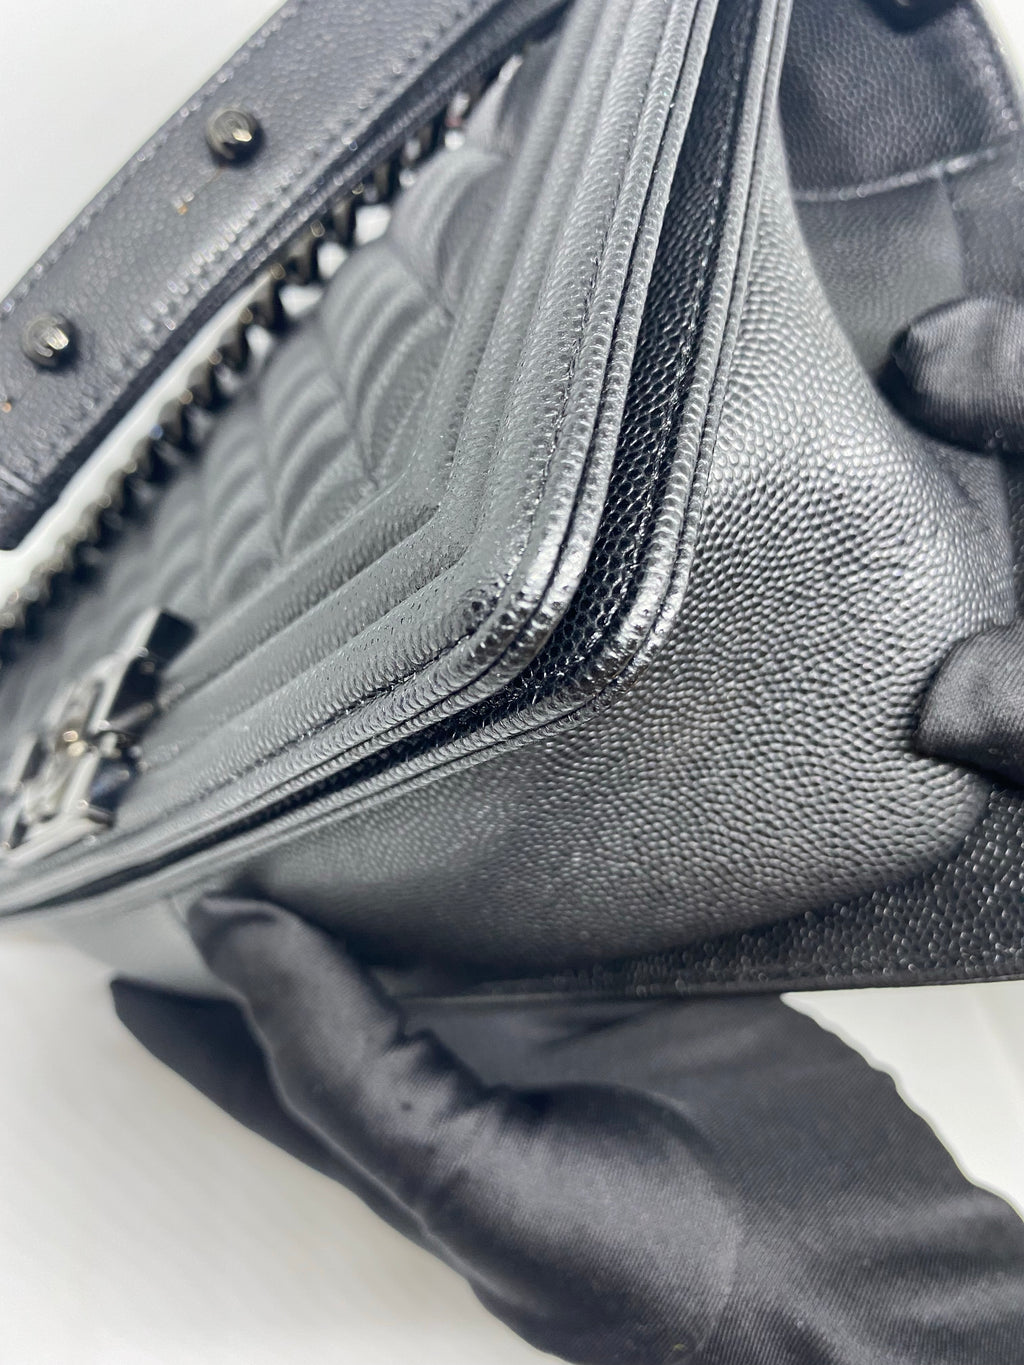 Chanel Black Caviar Leather Boy Wallet On Chain